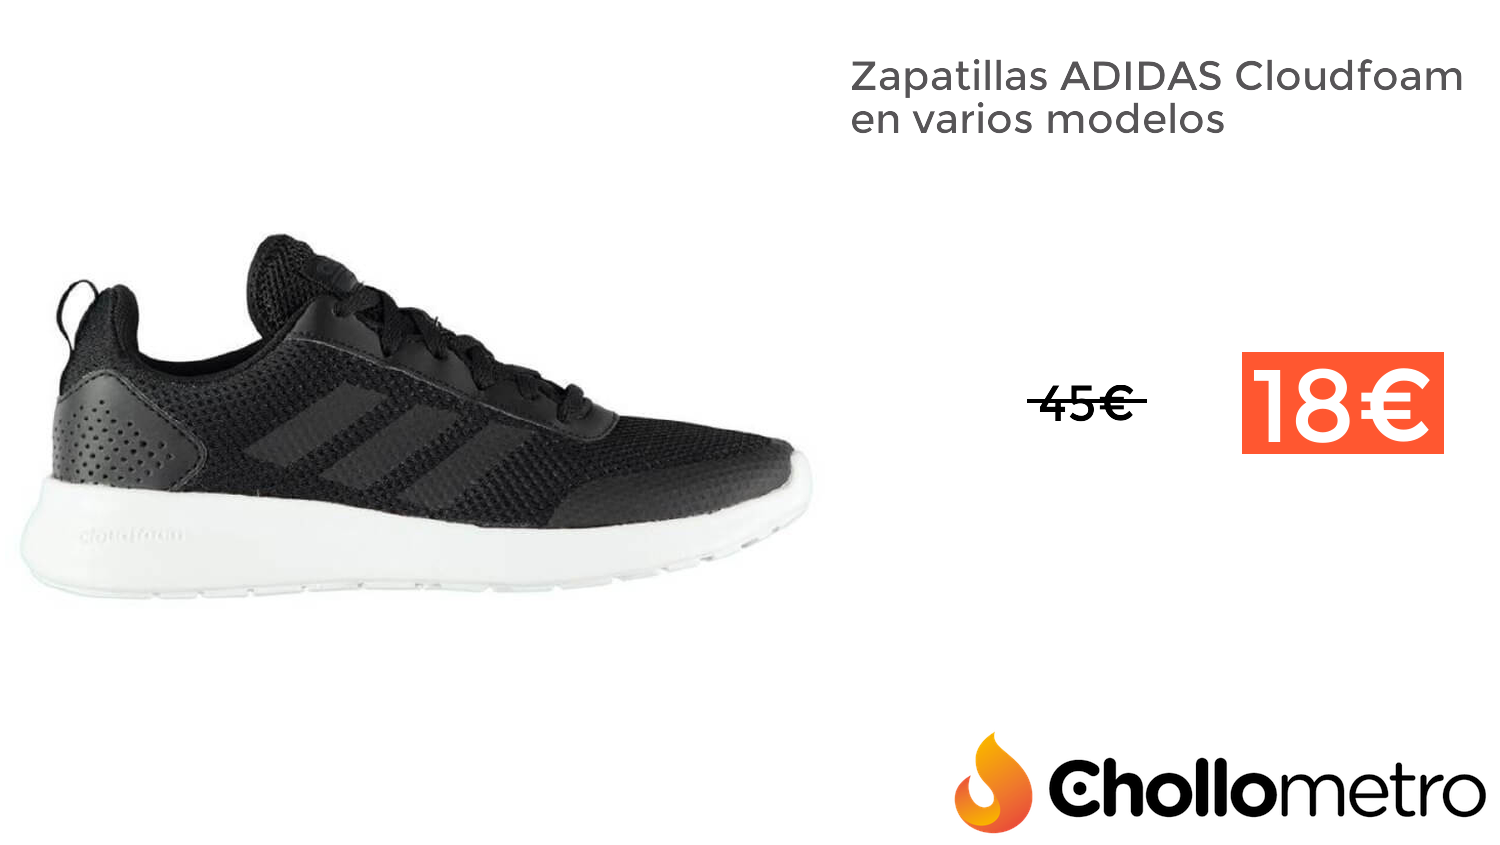 Chollometro on Twitter: "#CHOLLO Zapatillas ADIDAS Cloudfoam en varios modelos disponibles por 18€ ➡️ https://t.co/lQRFgOFhzo https://t.co/iuilAW22bp" Twitter